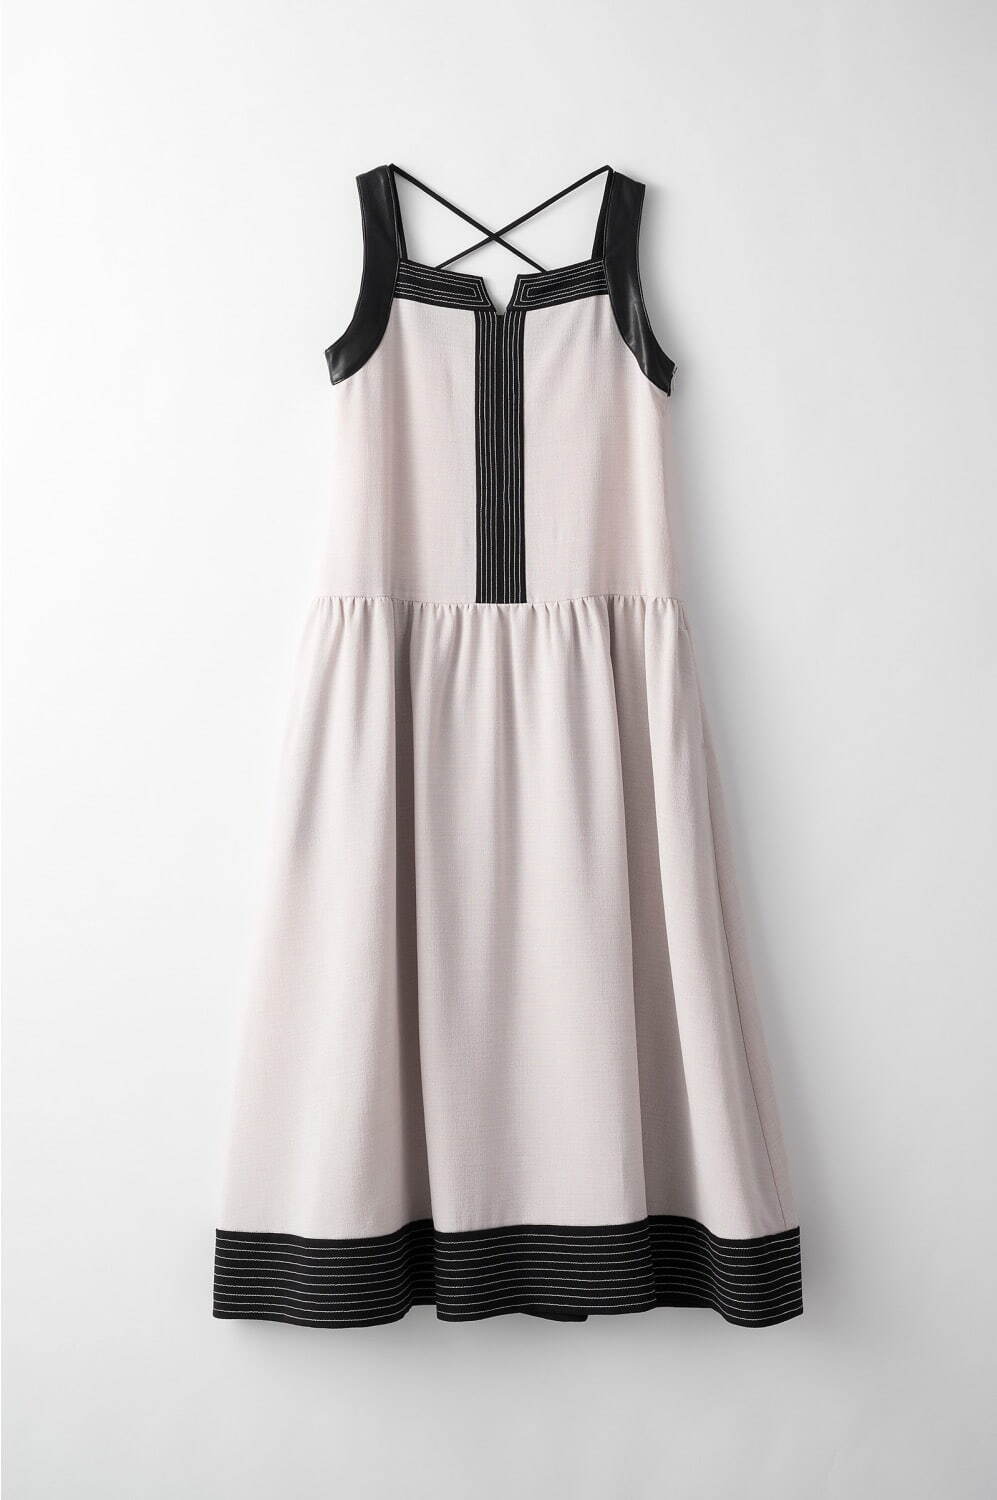 Evermore dress 29,700円